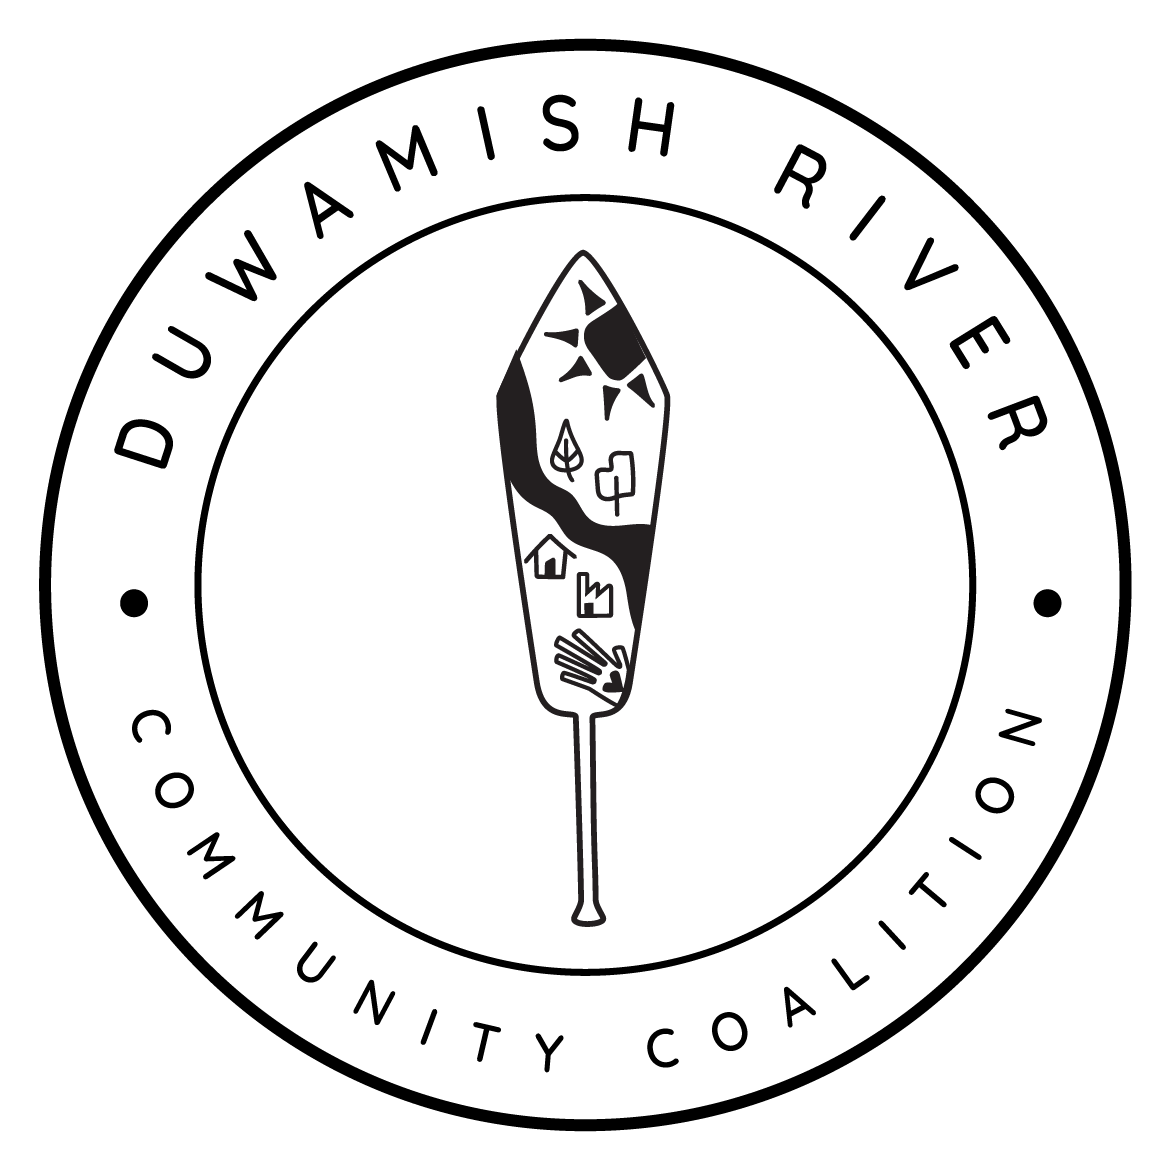 Duwamish River Community Coalition